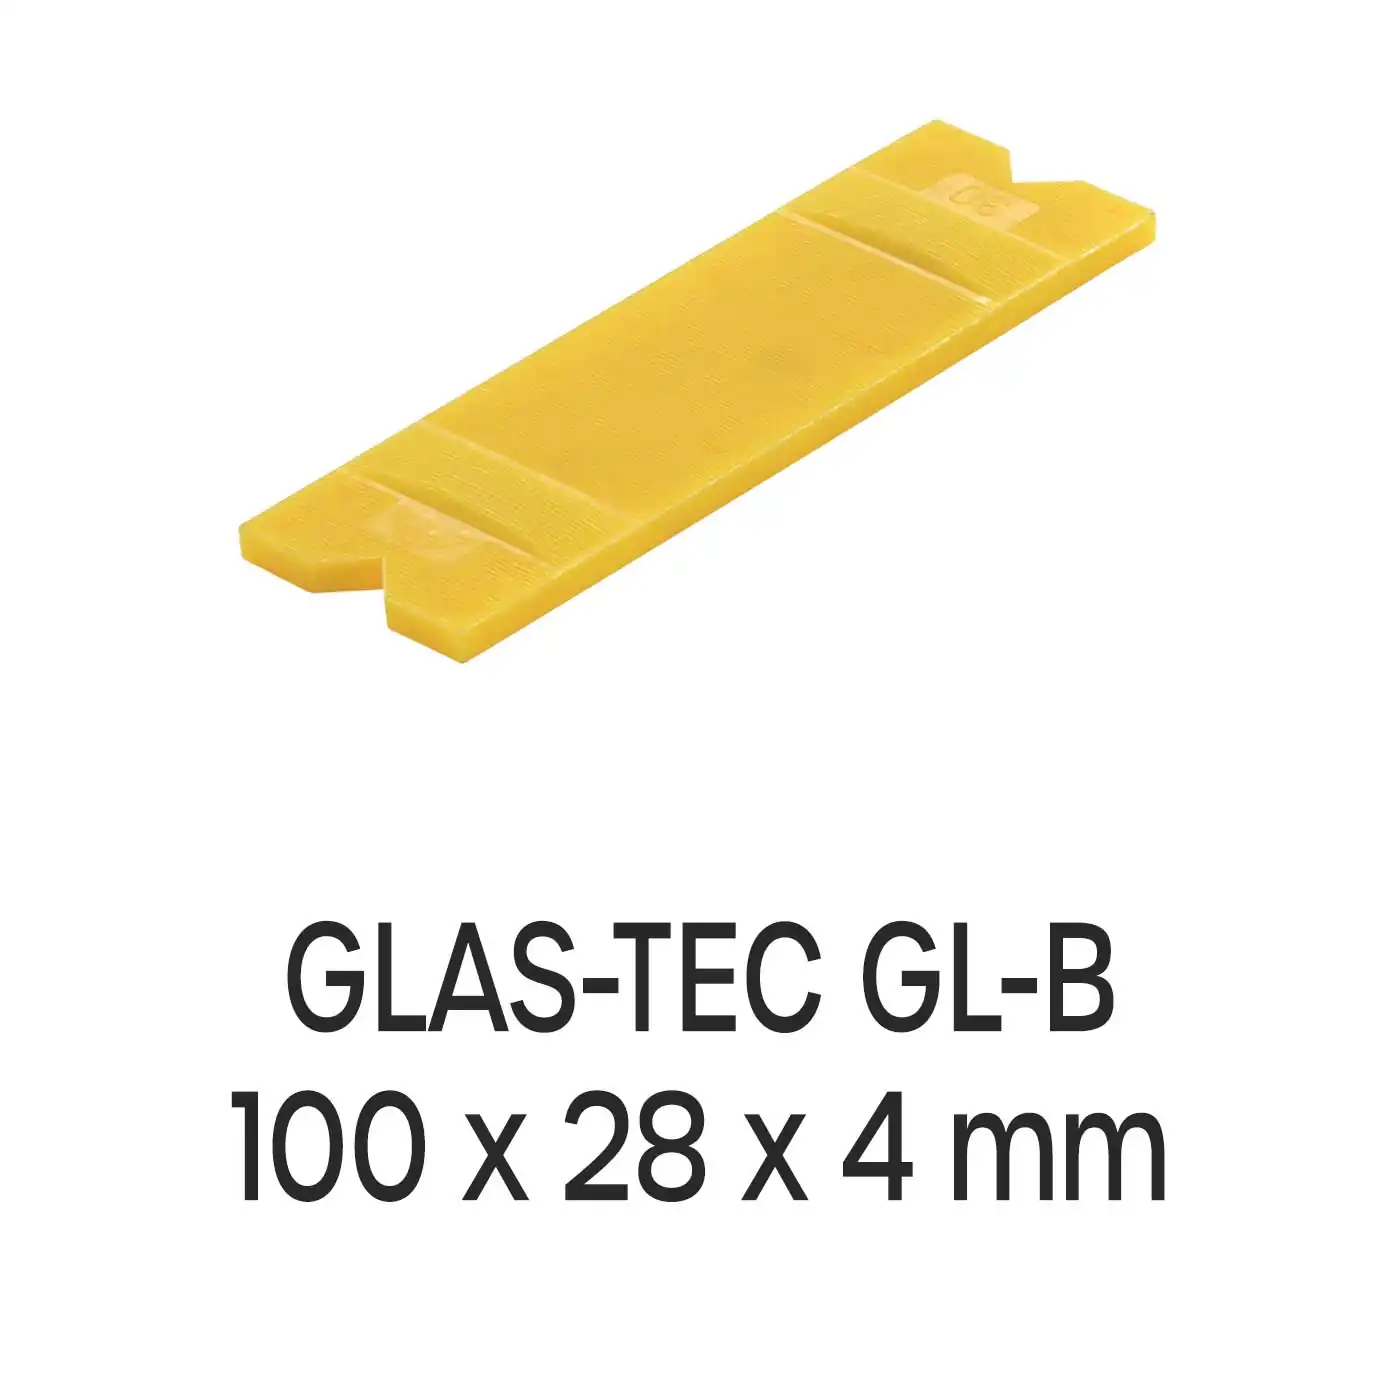 Roto GLAS-TEC GL-B 100 x 28 x 4 mm Verglasungsklötze 1000 Stück